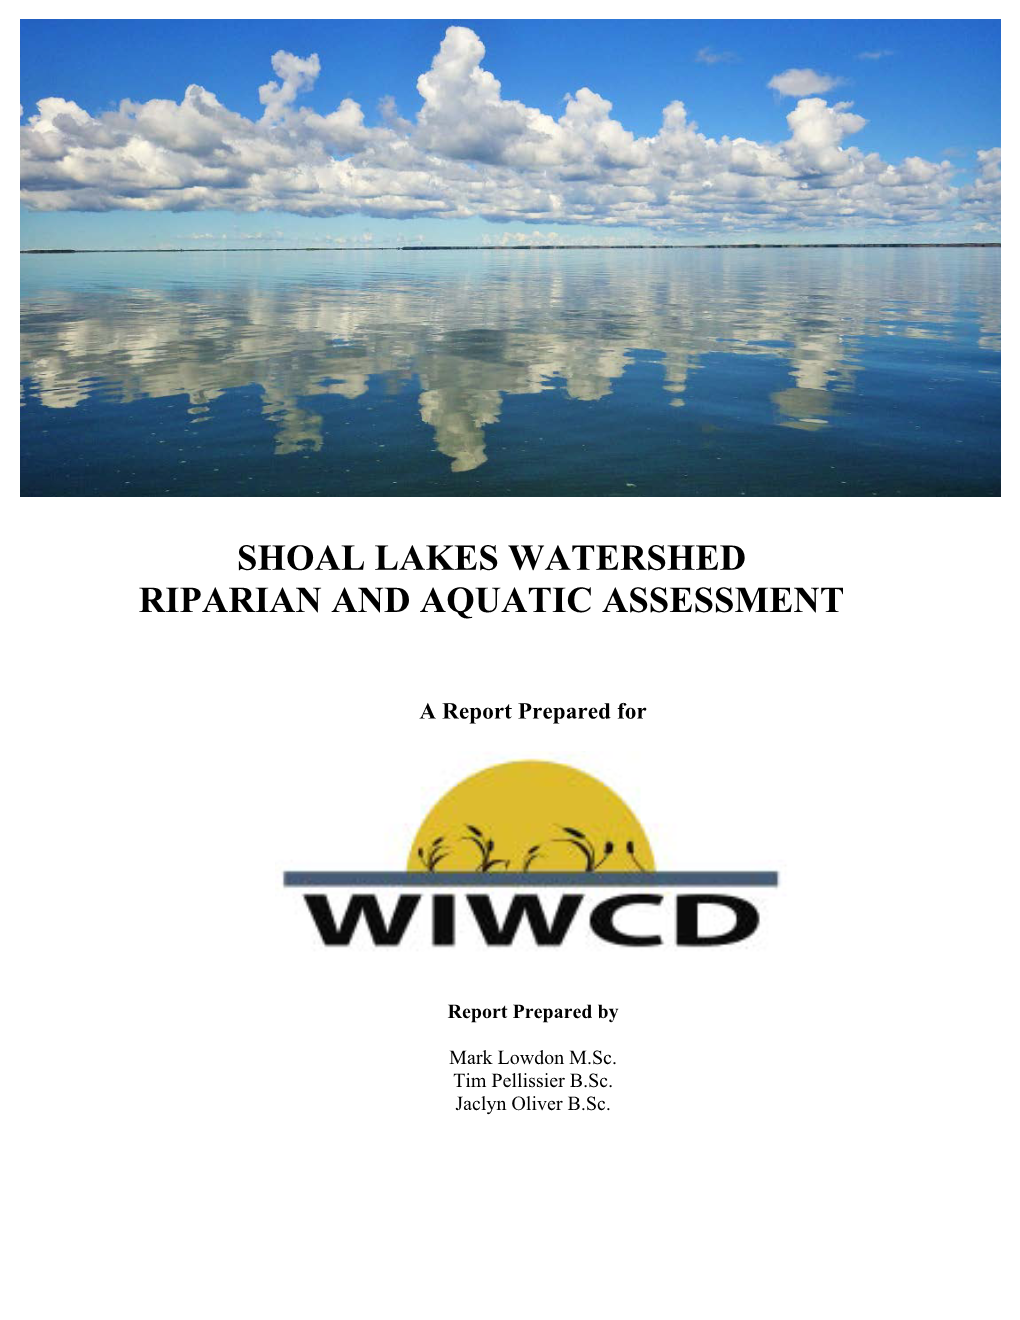 Shoal Lakes Watershed Riparian and Aquatic Assessment